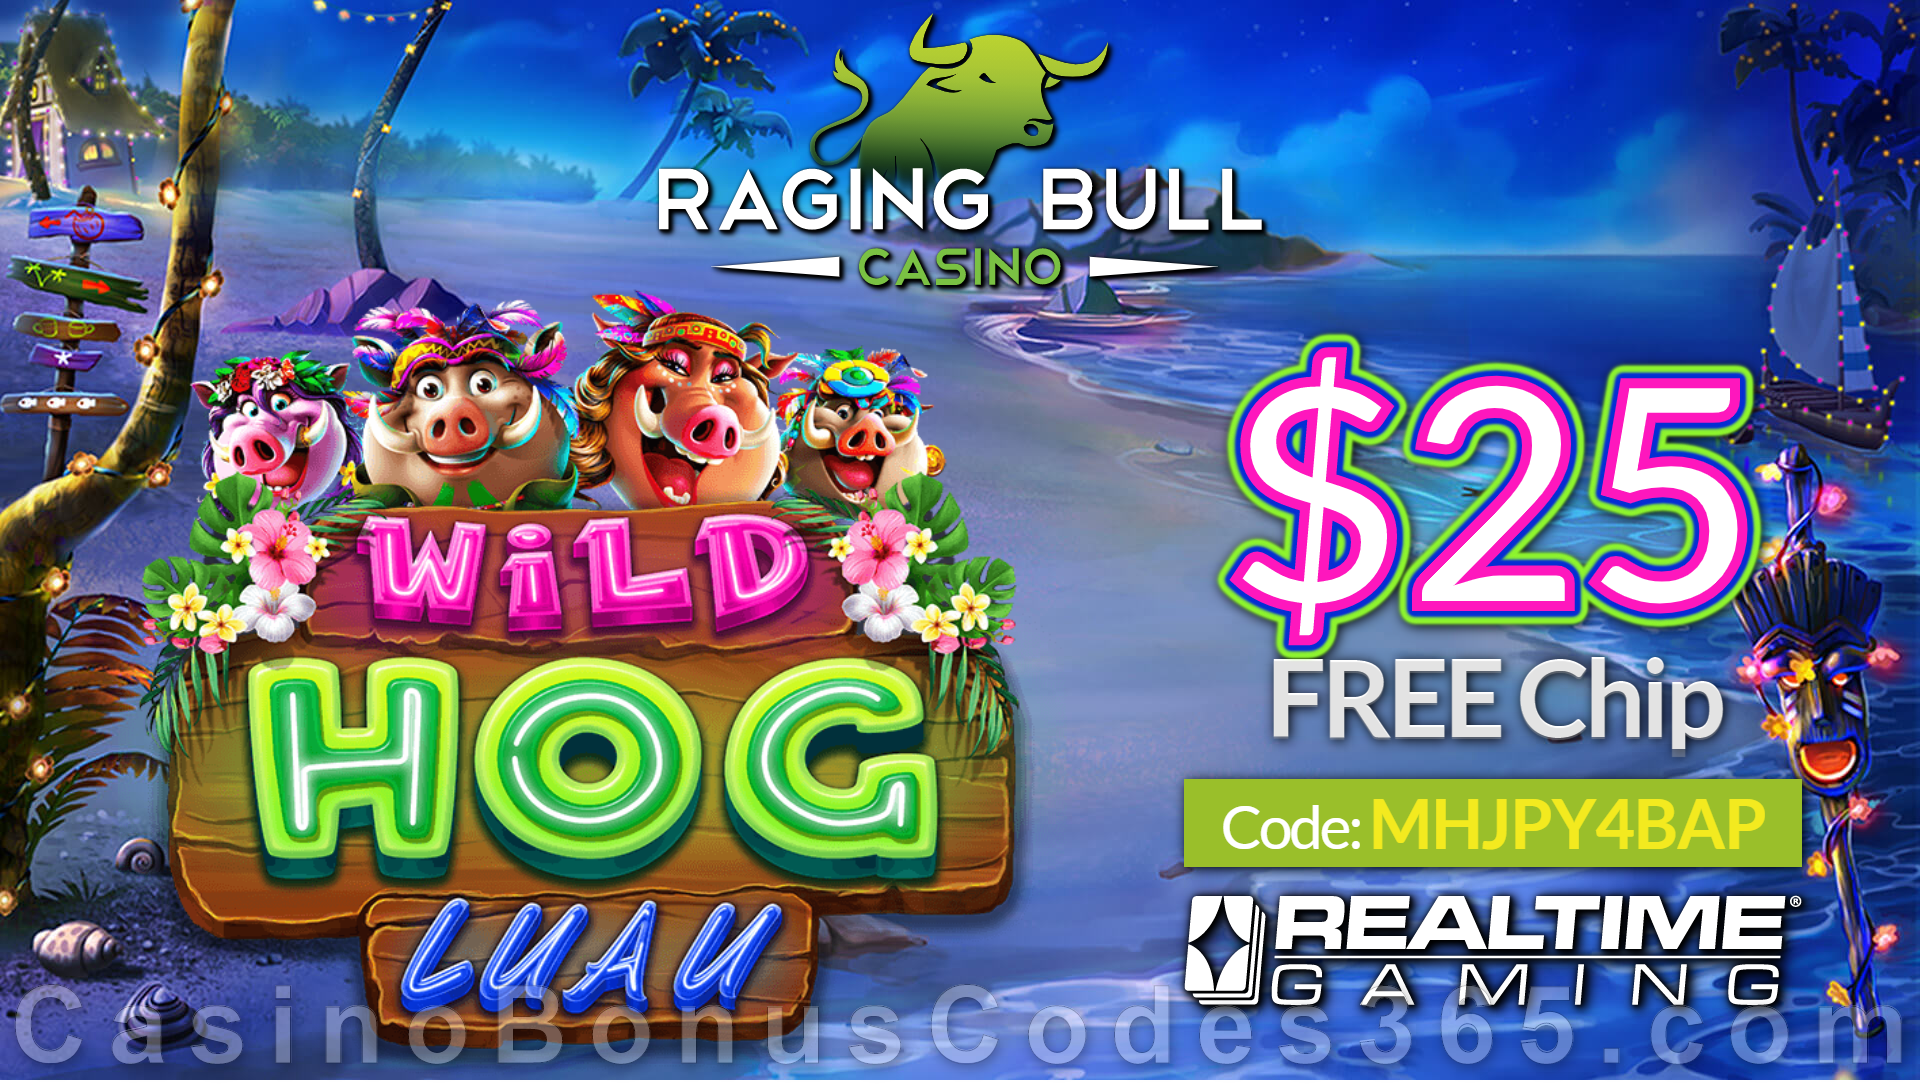 Raging bull casino no deposit codes june 2019